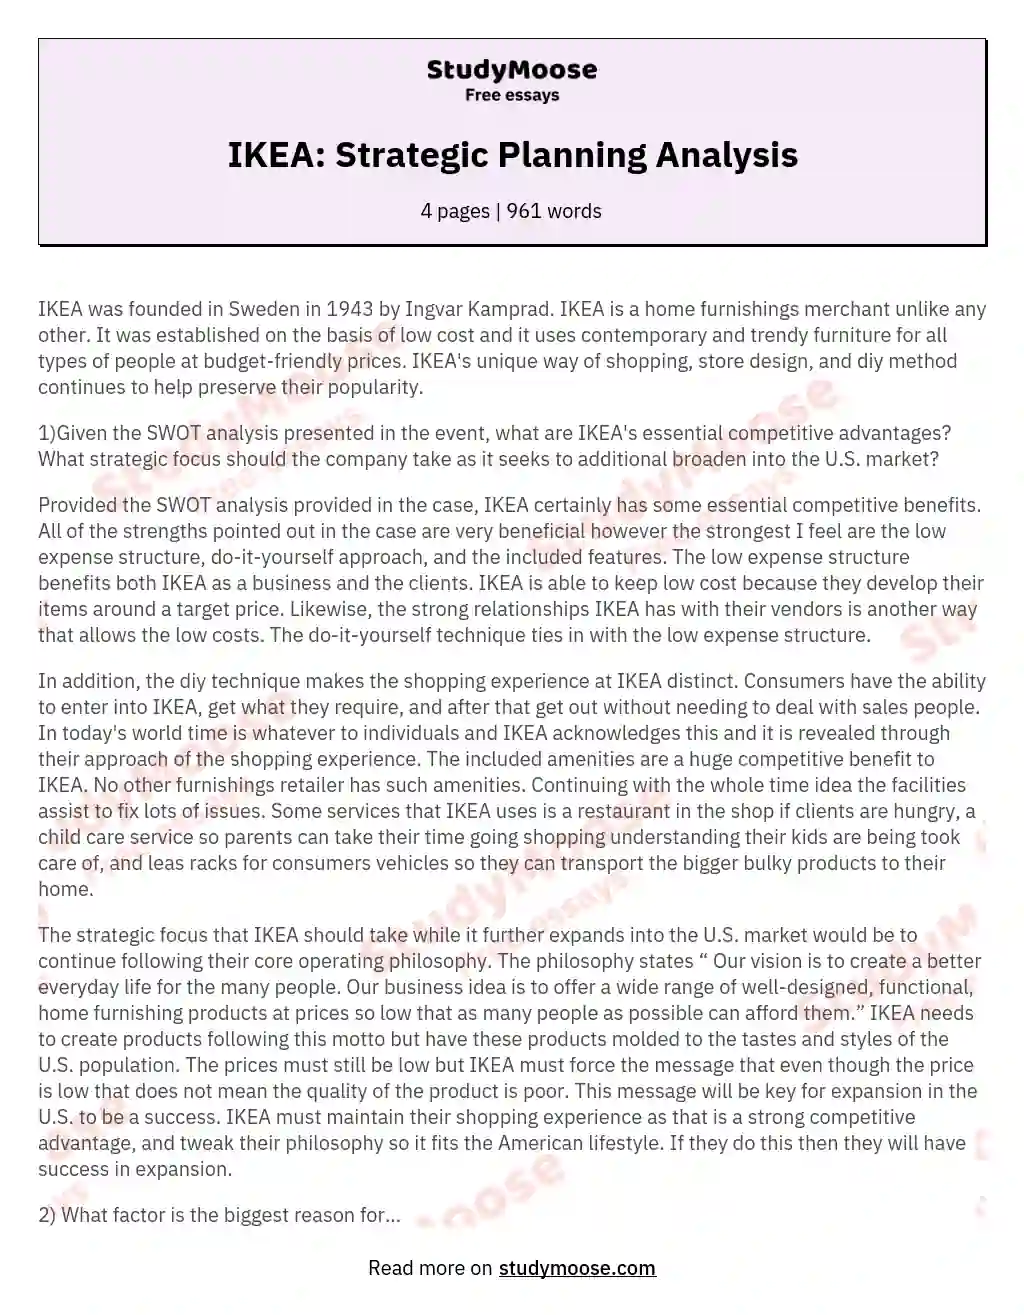 IKEA: Strategic Planning Analysis essay